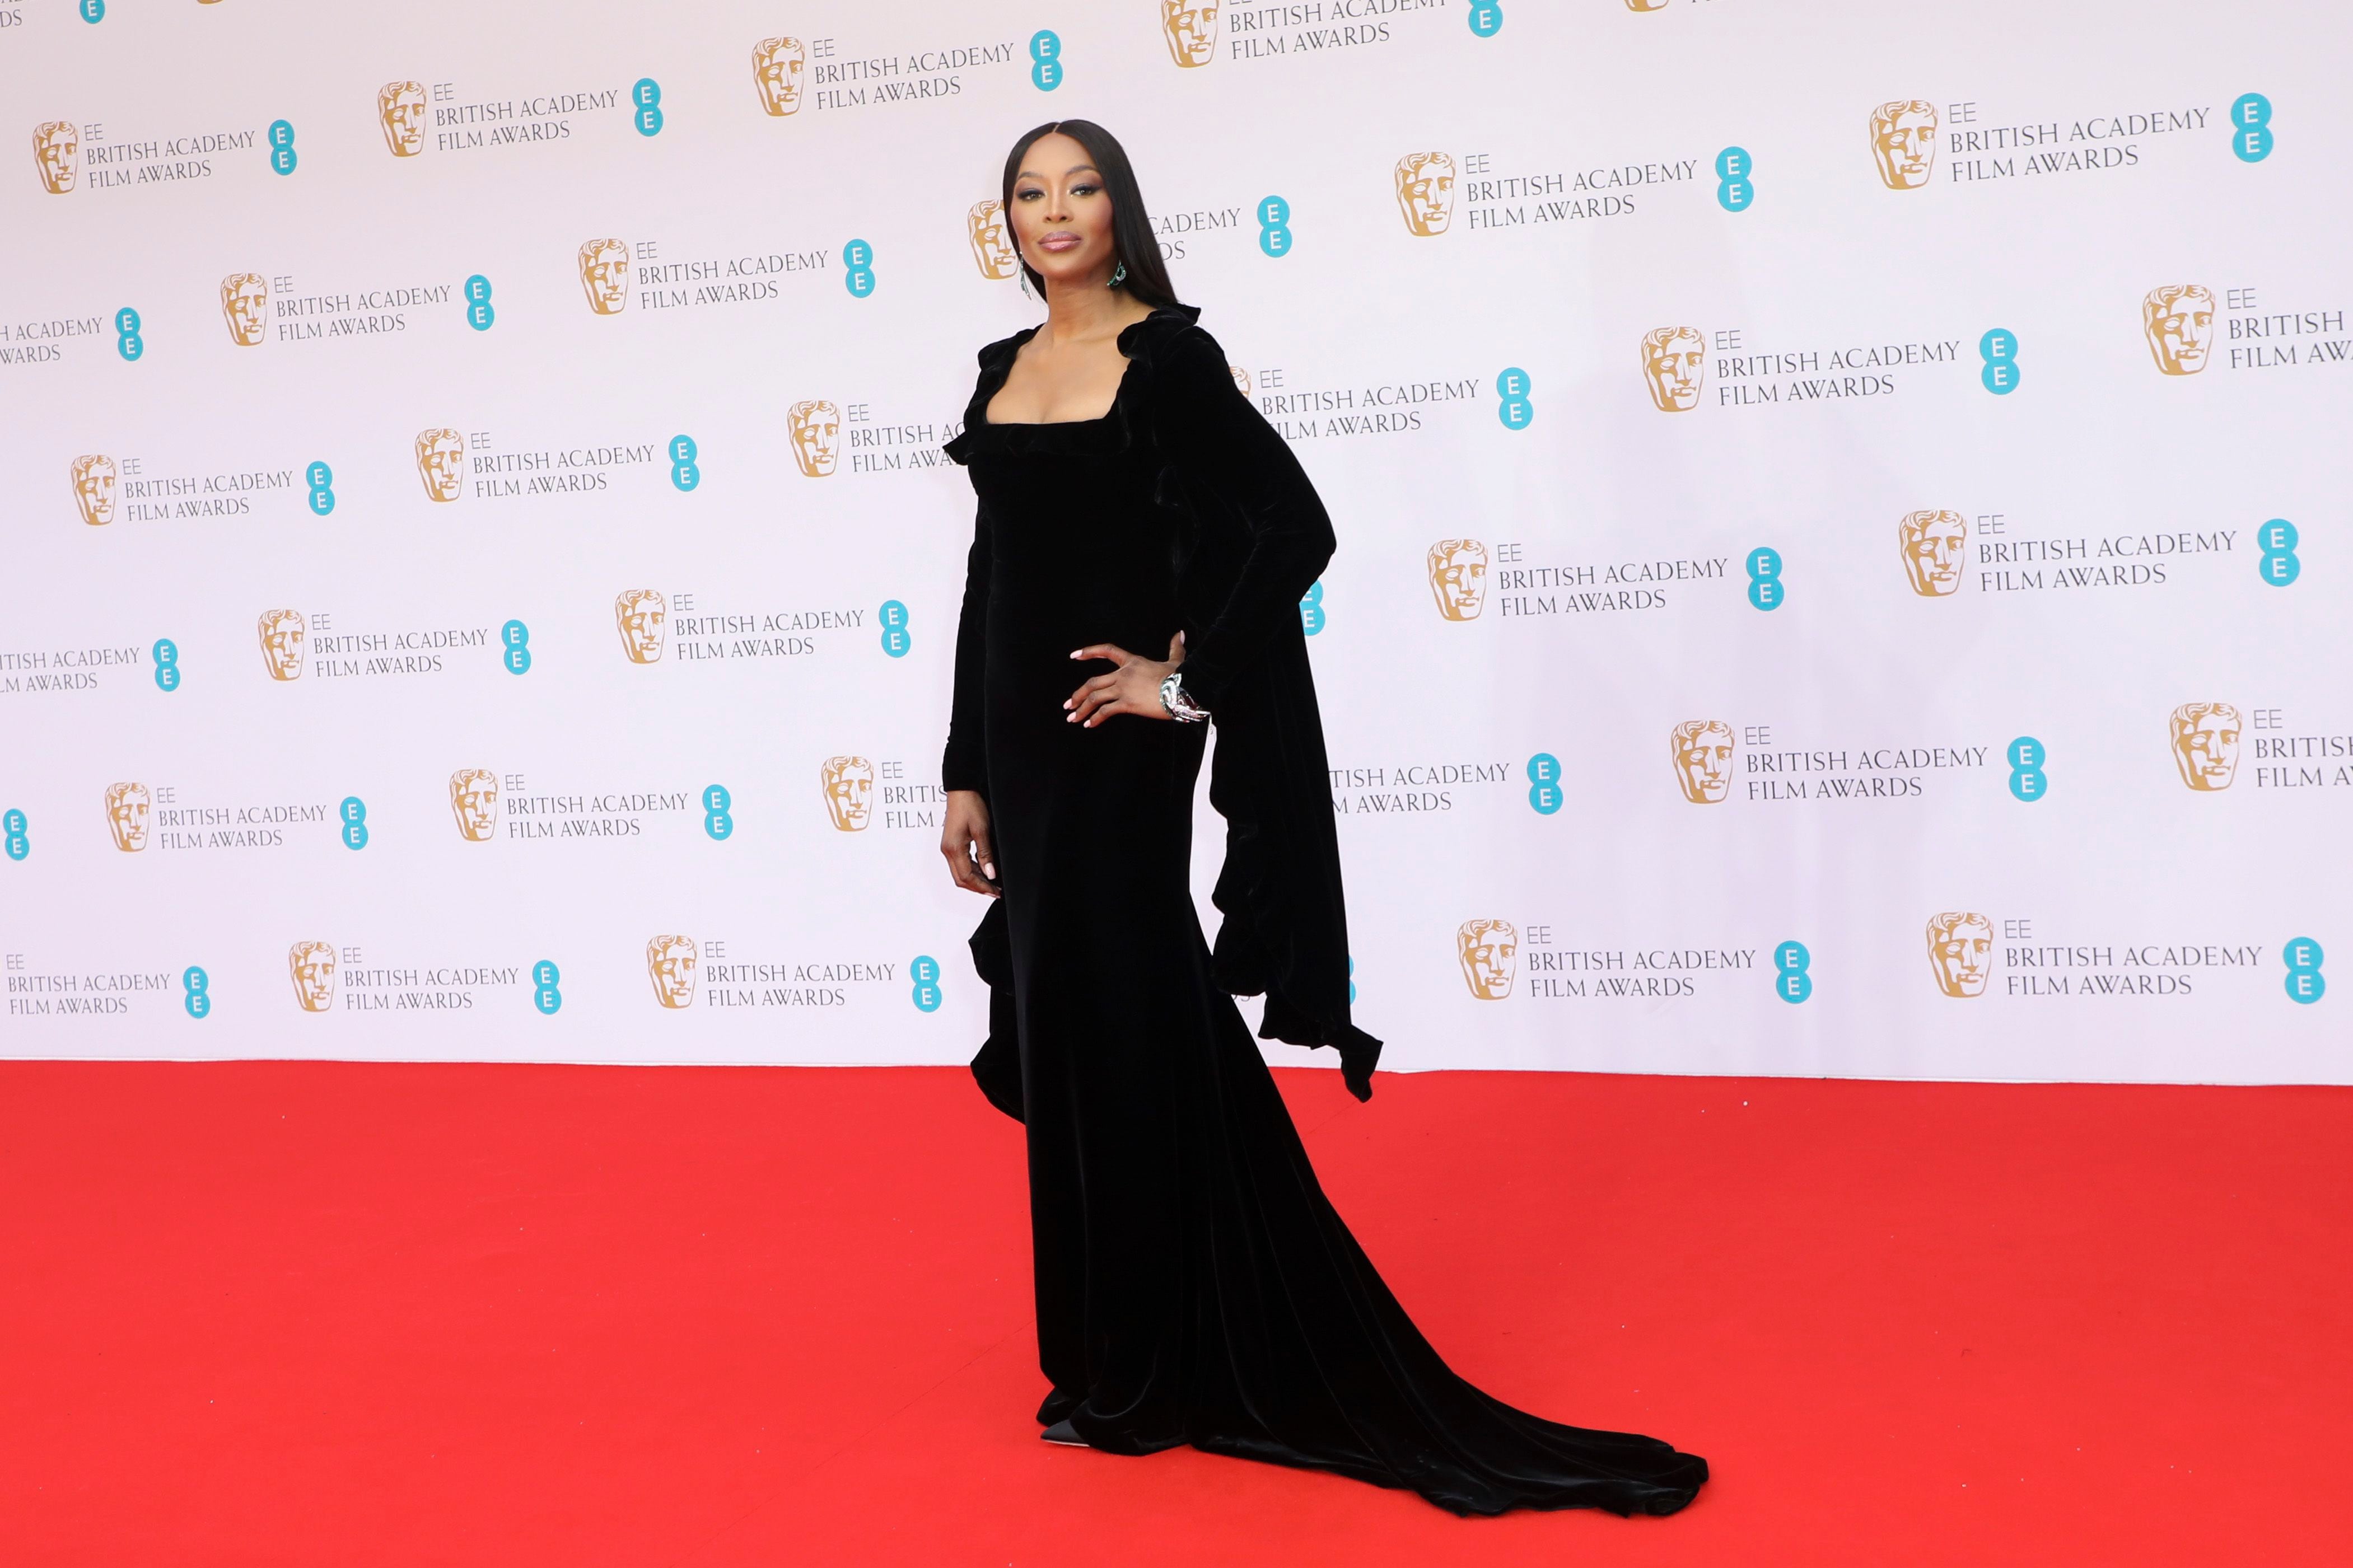 BAFTA Awards 2022 Arrivals, Red Carpet [PHOTOS]